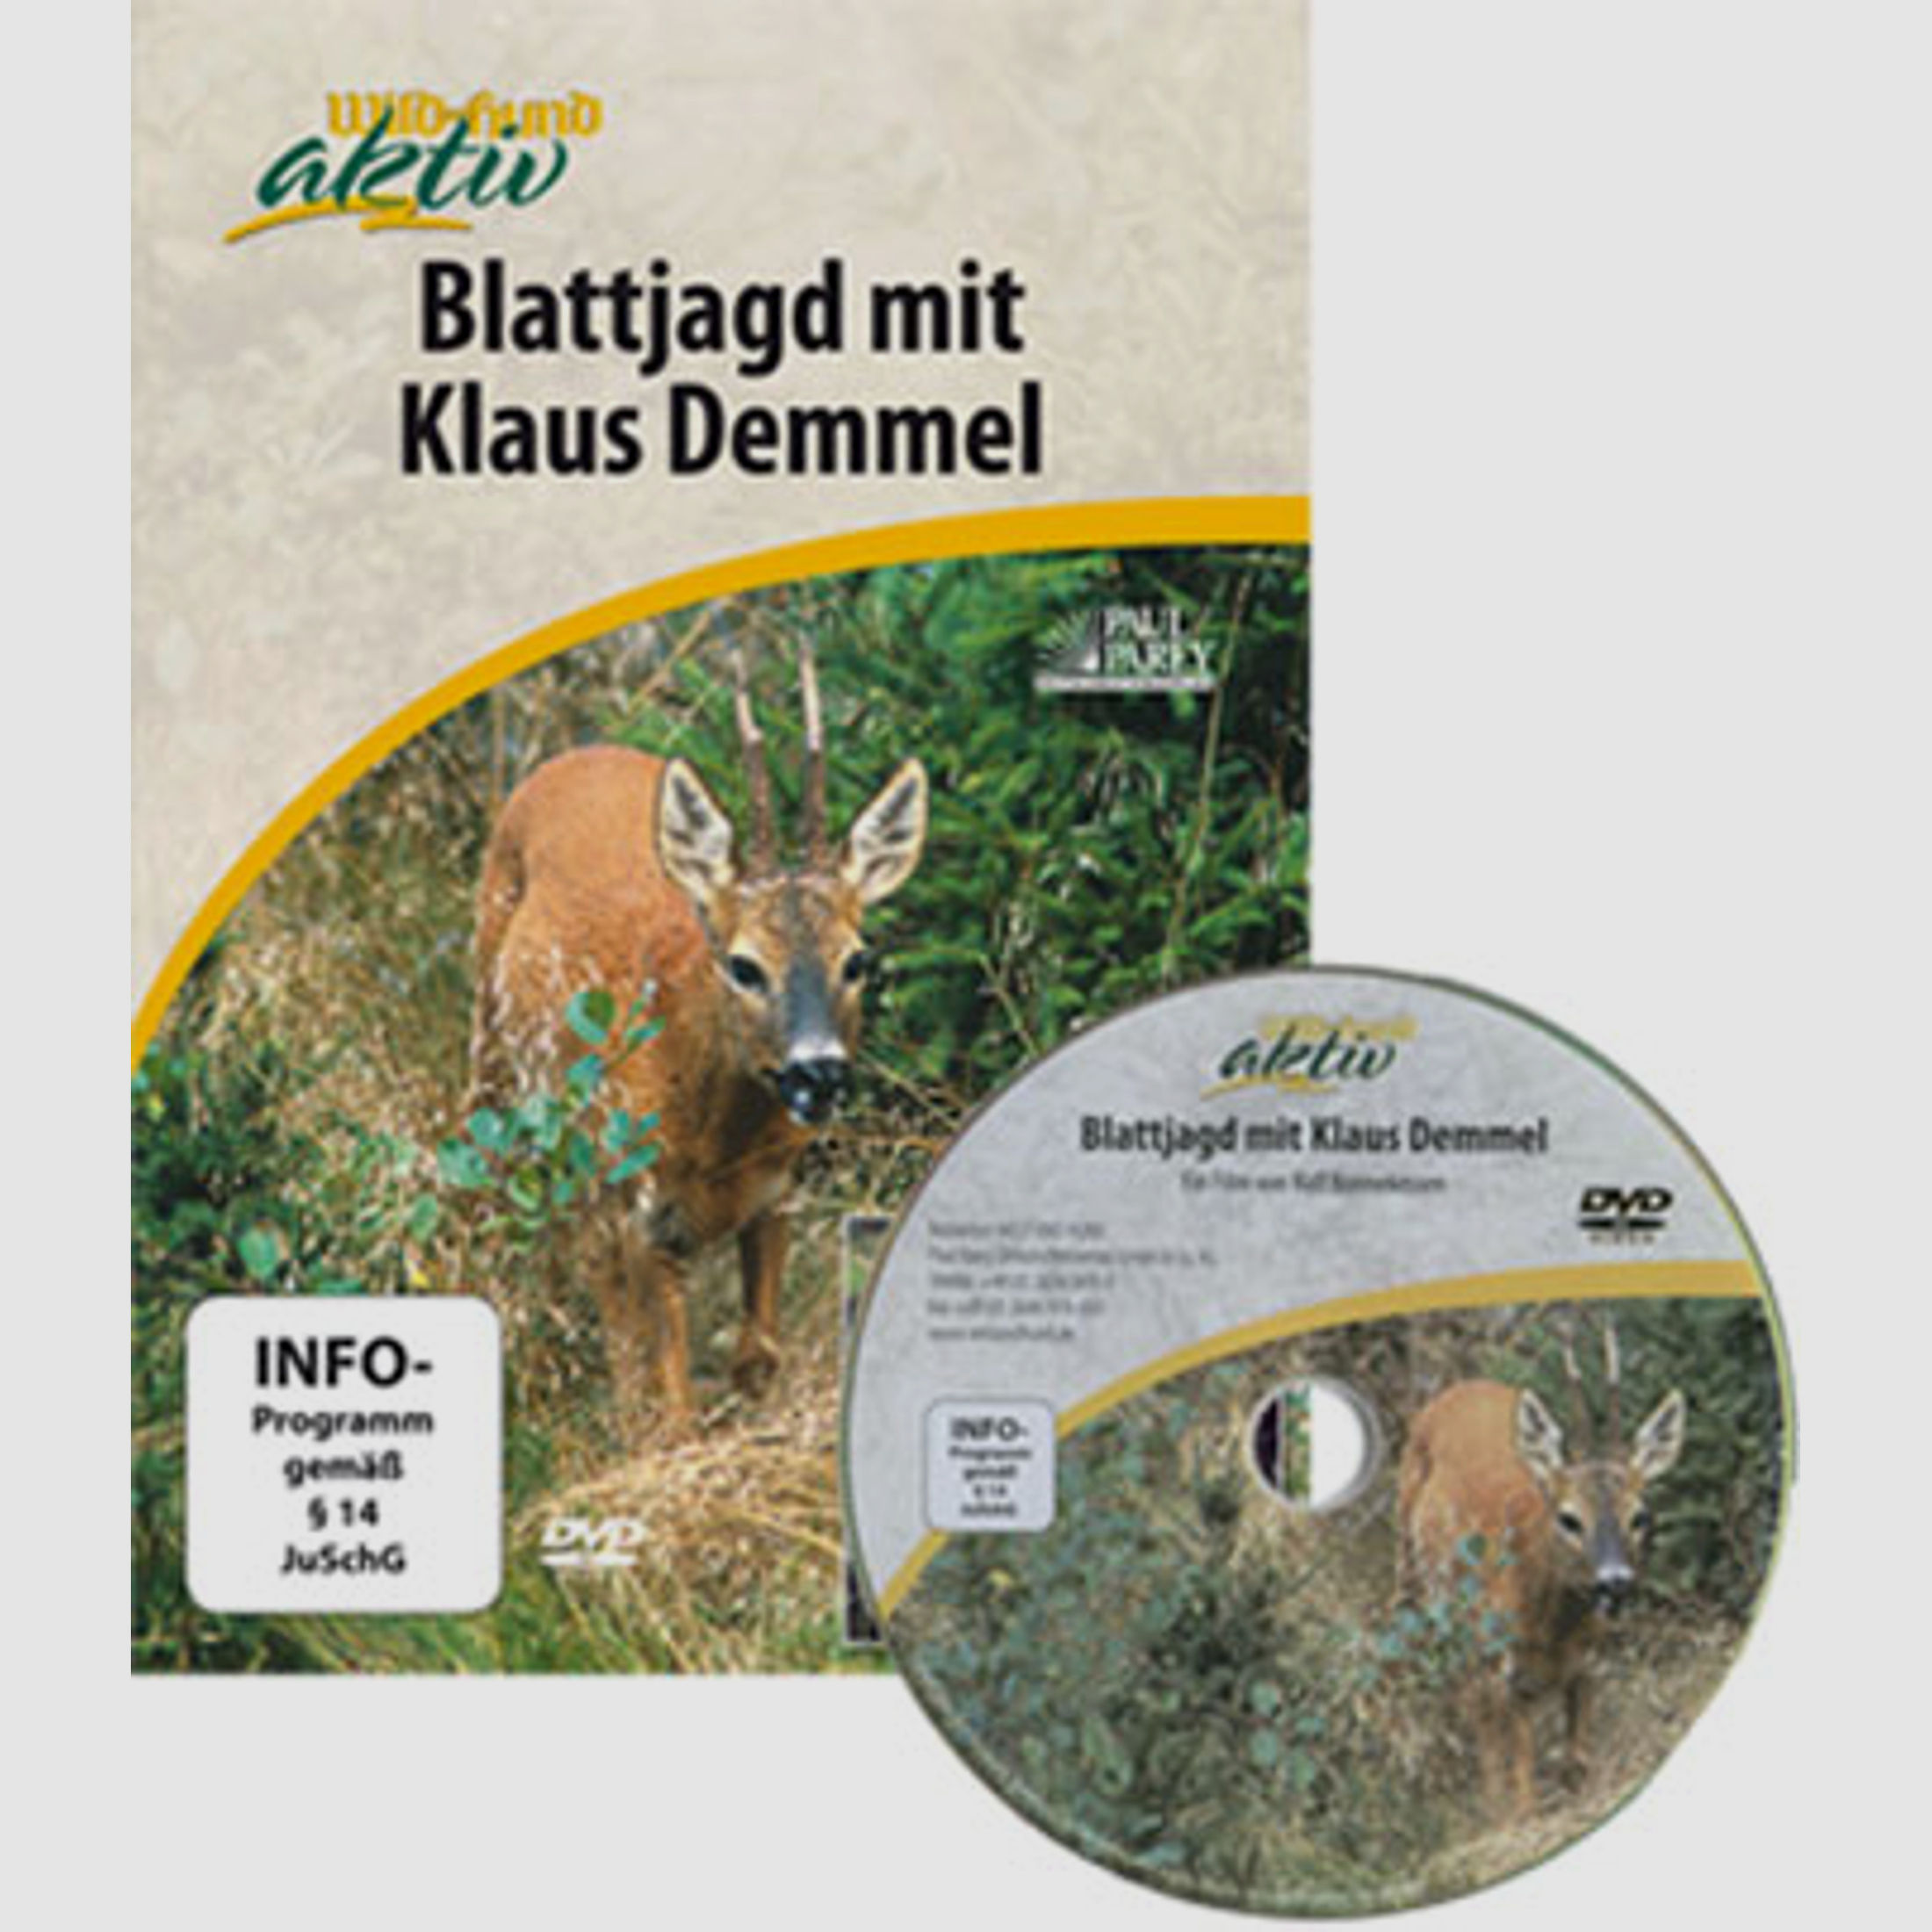 DVD + Workshop "Blattjagd mit Klaus Demmel"